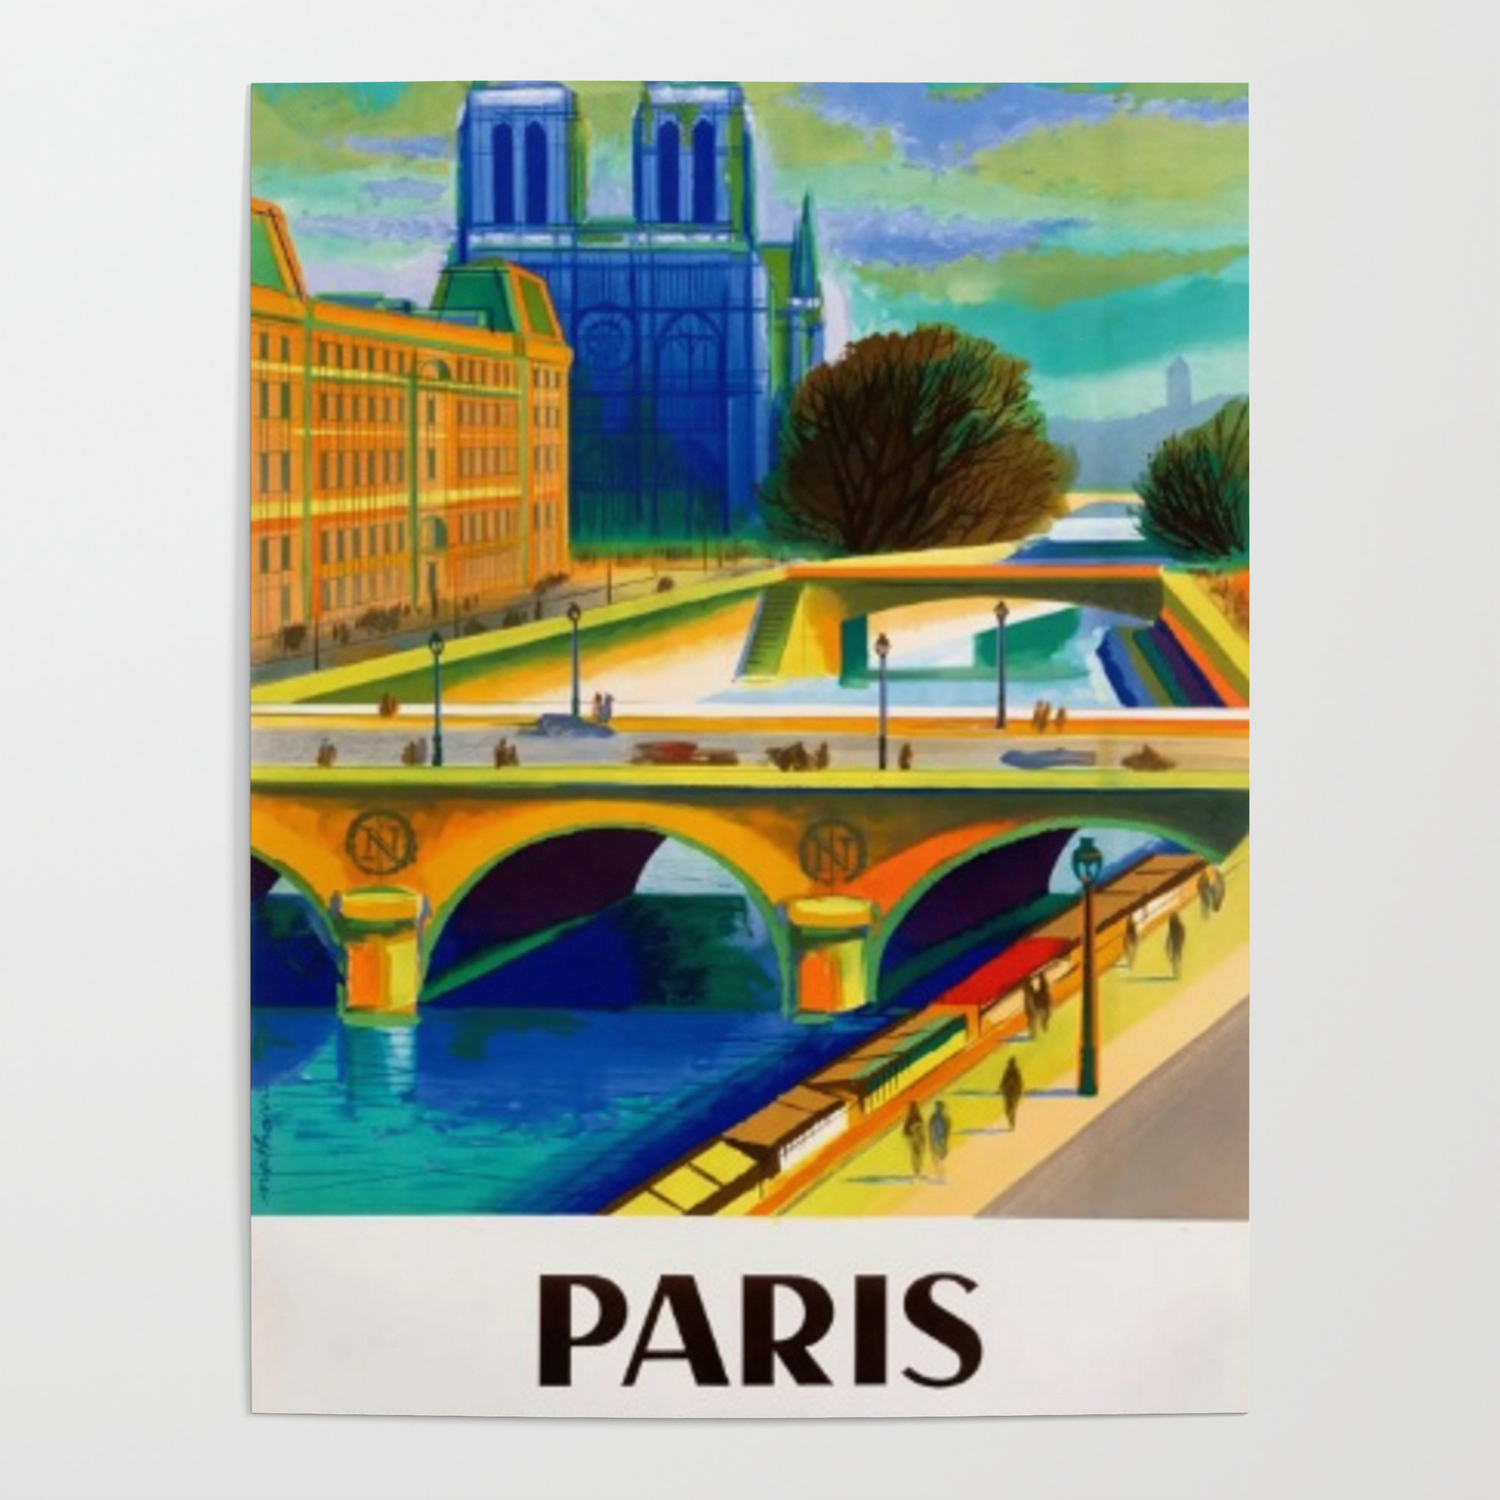 Notre Dame Cathedral Paris France Seine River Vintage Travel Art Poster Print 